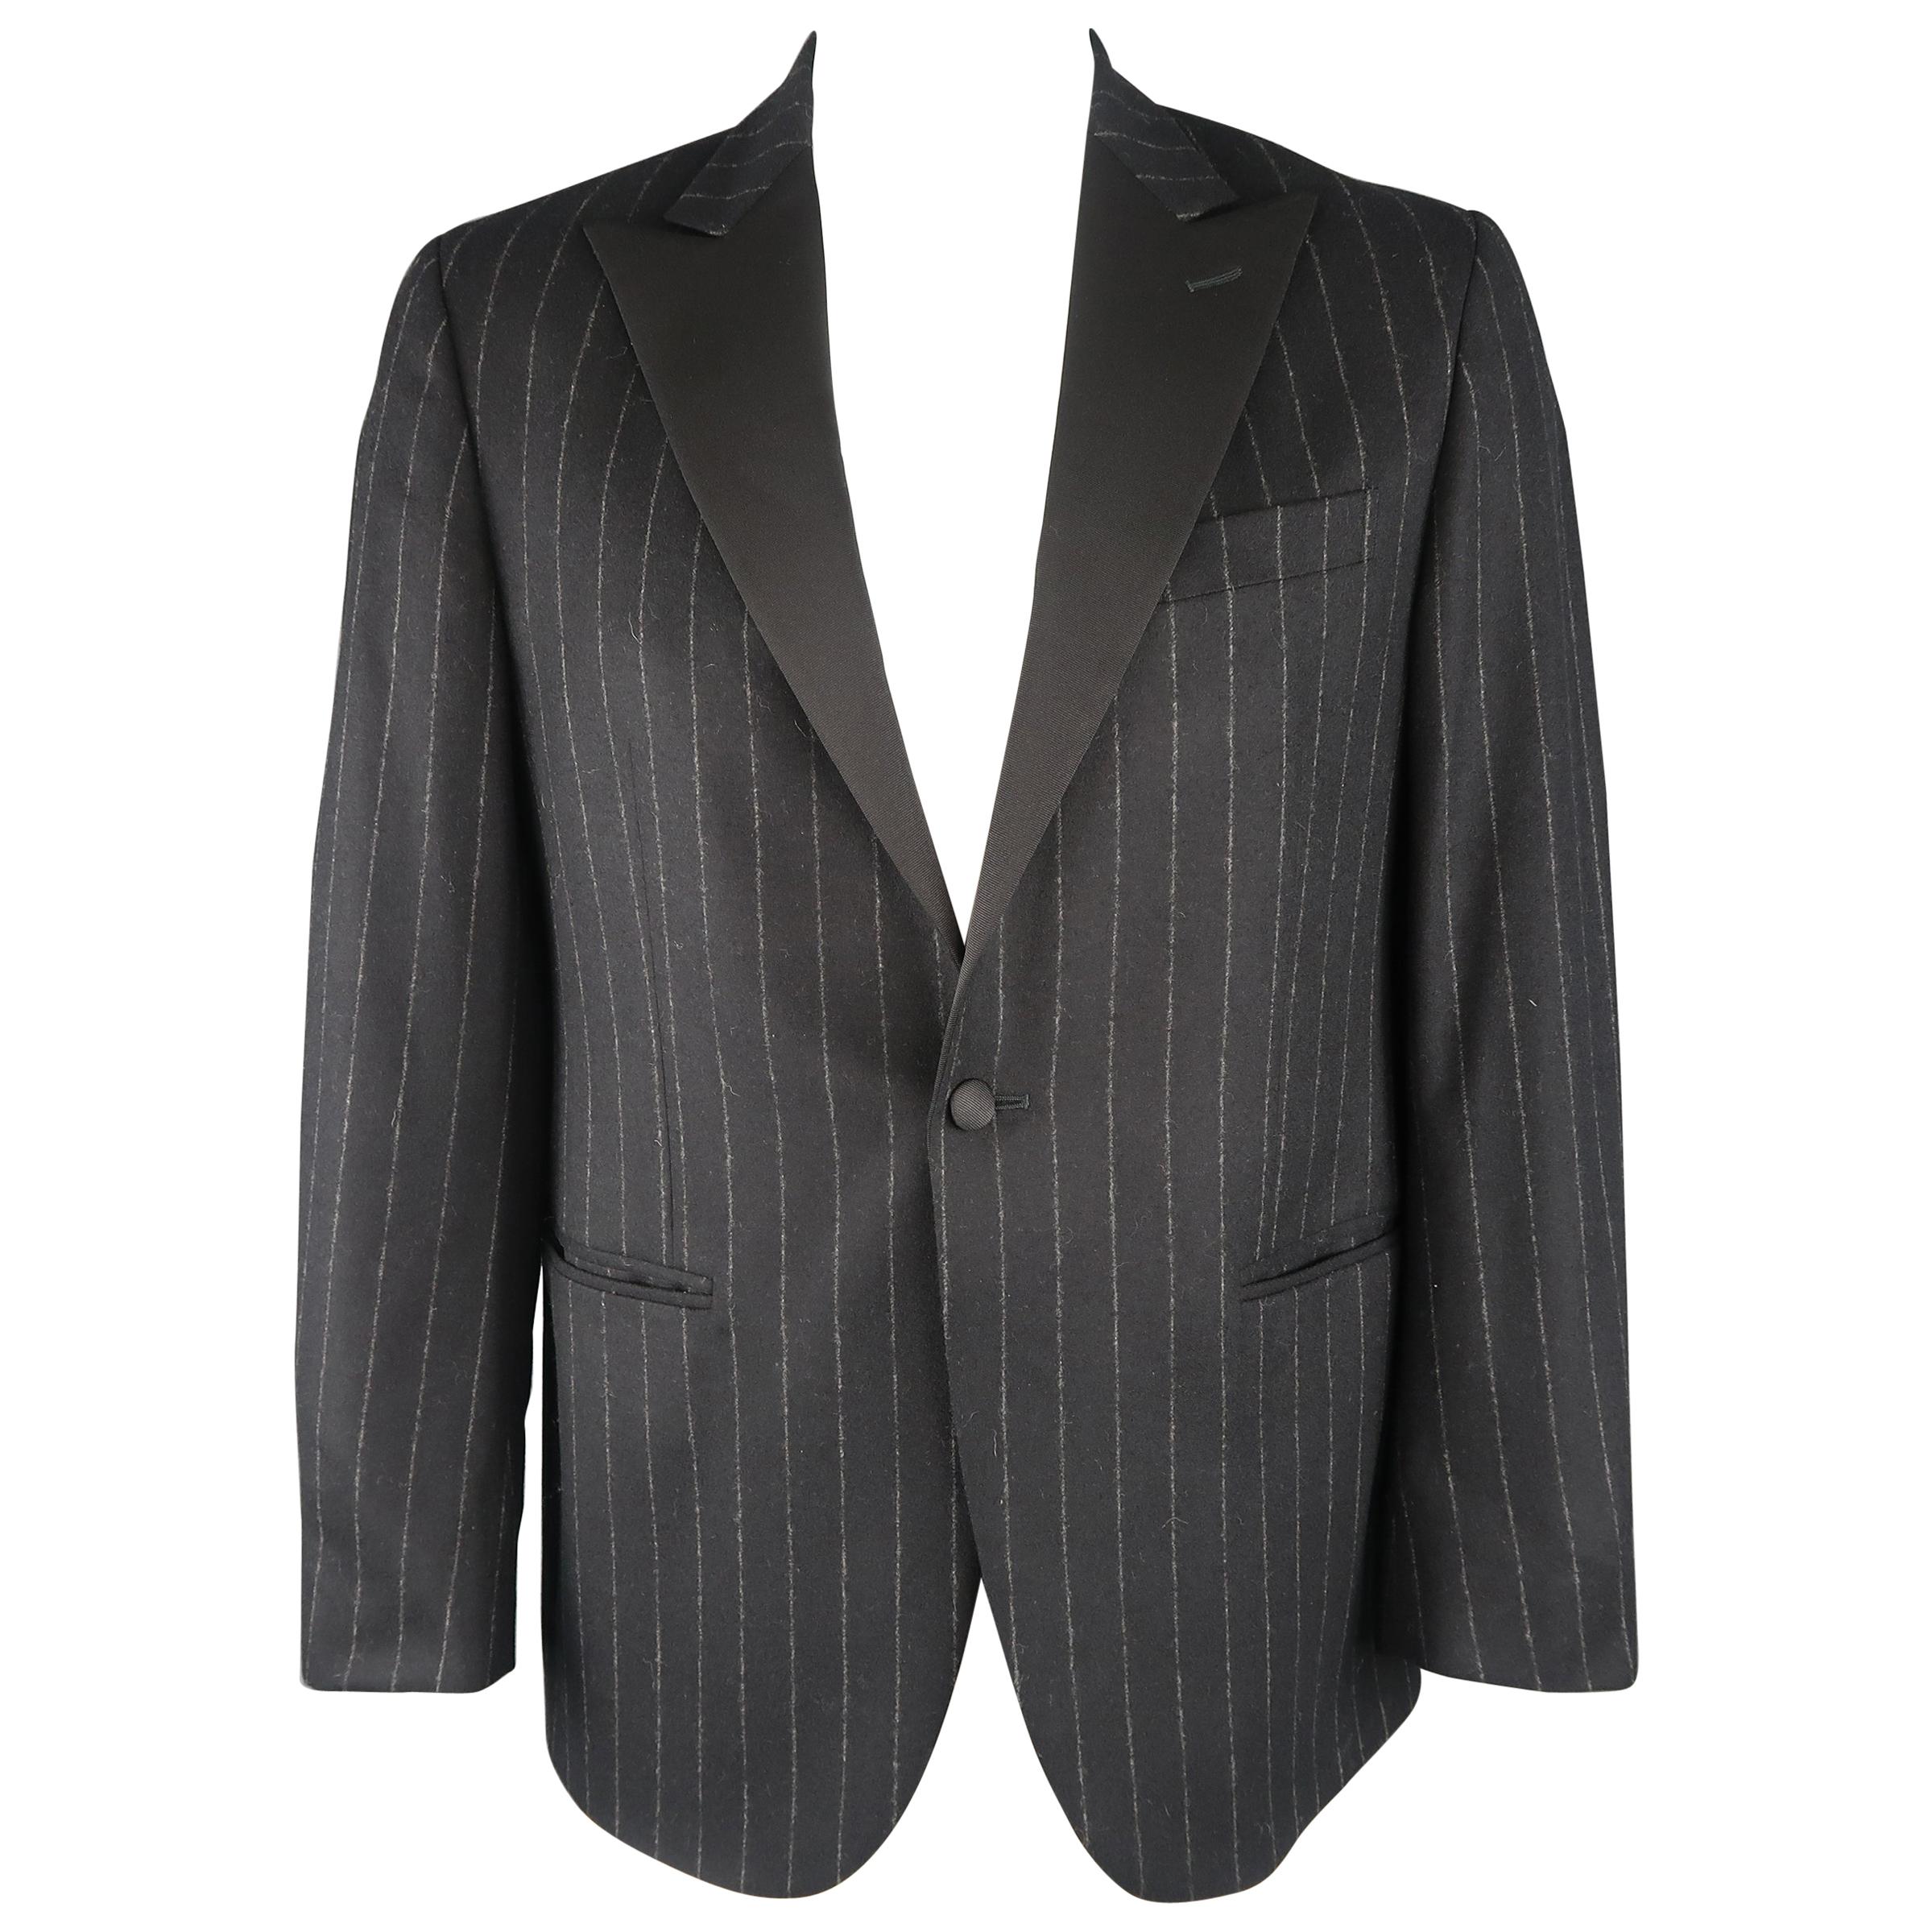 RALPH LAUREN 42 Black Stripe Wool / Cashmere Tuxedo Lapel Sport Coat / Jacket